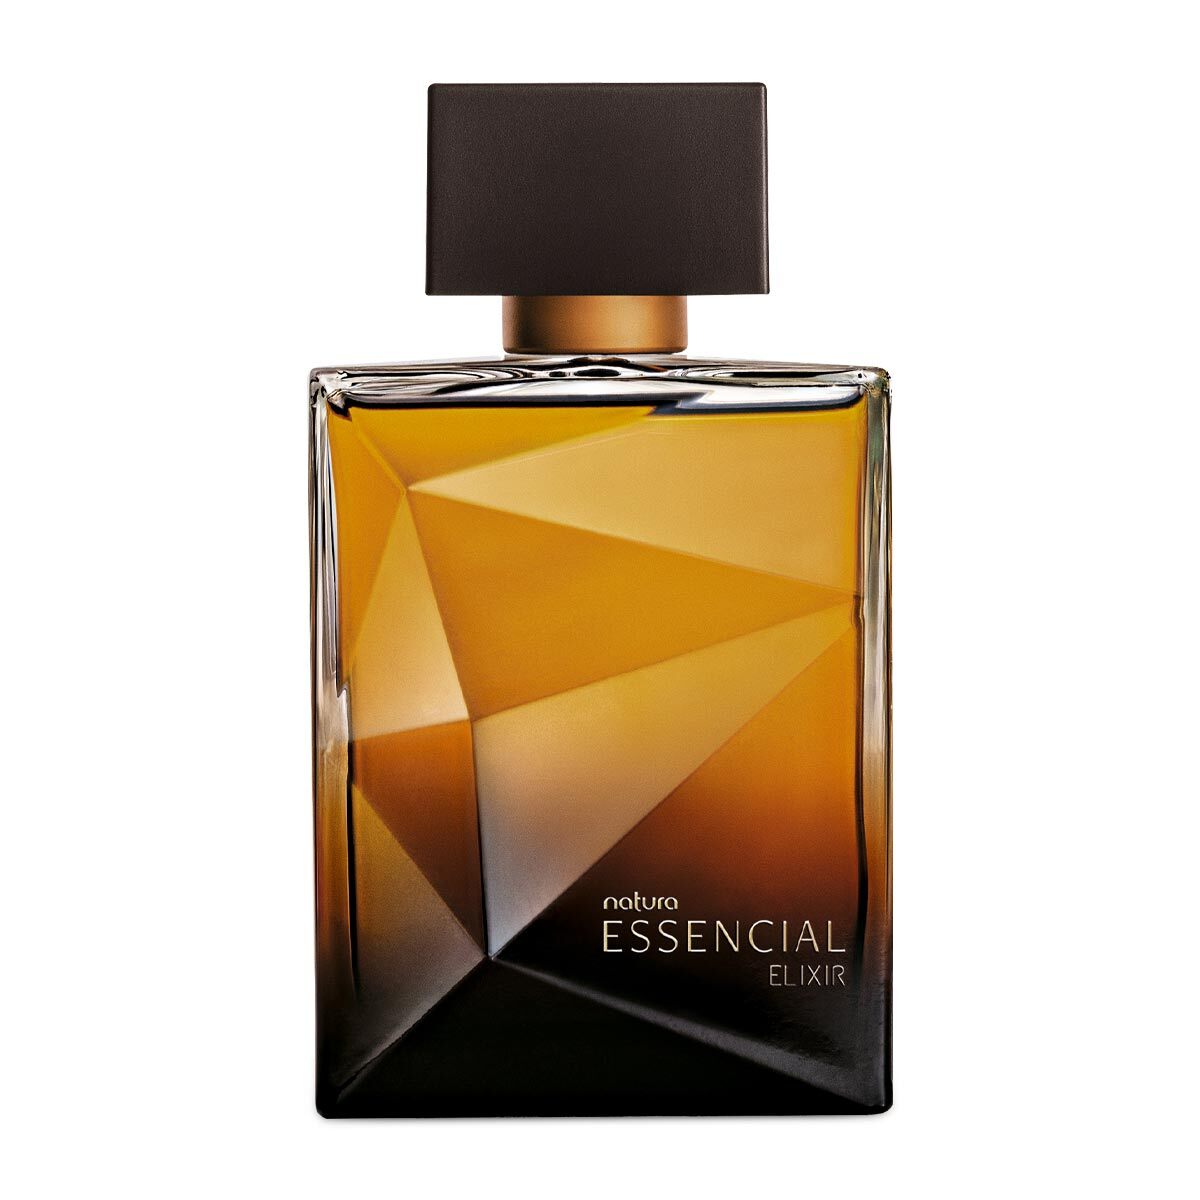 Natura ESSENCIAL Deo Elixir Masculino / Deo Parfum Essential Men's Elixir - 100ml